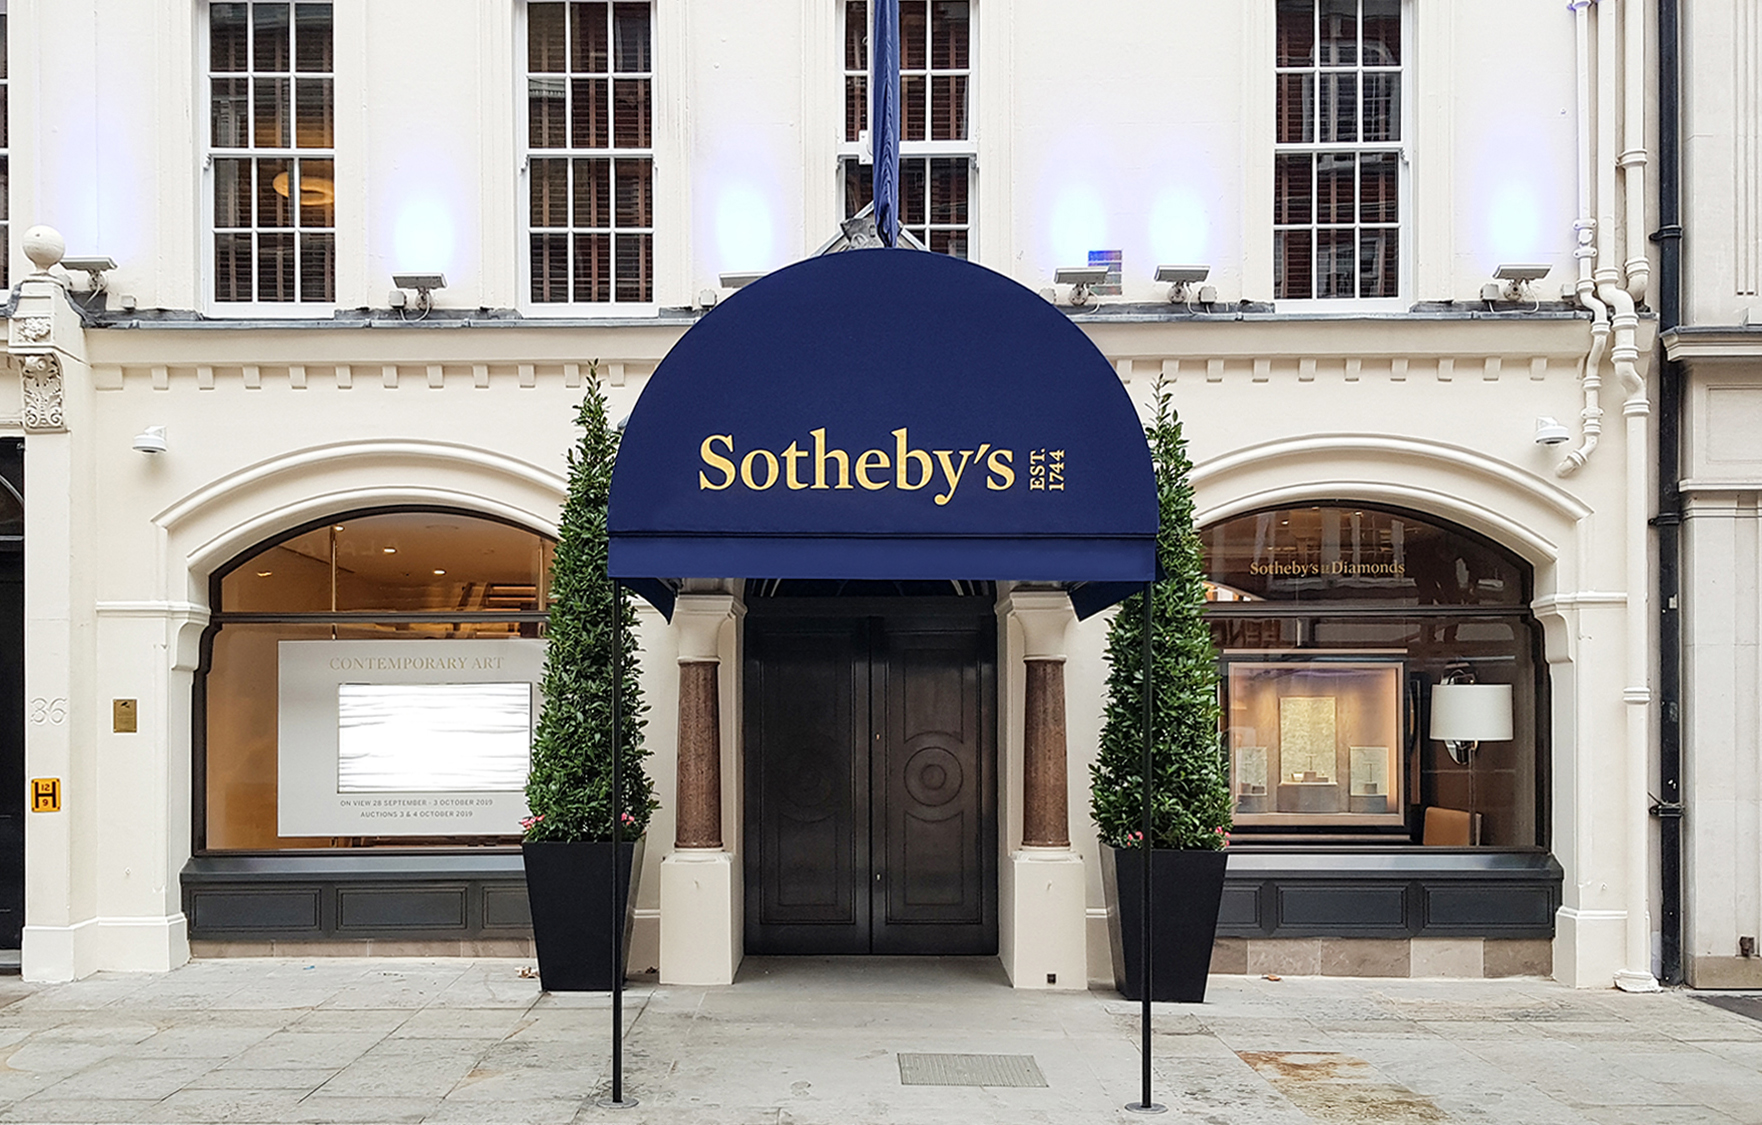 Sotheby's entrance canopy